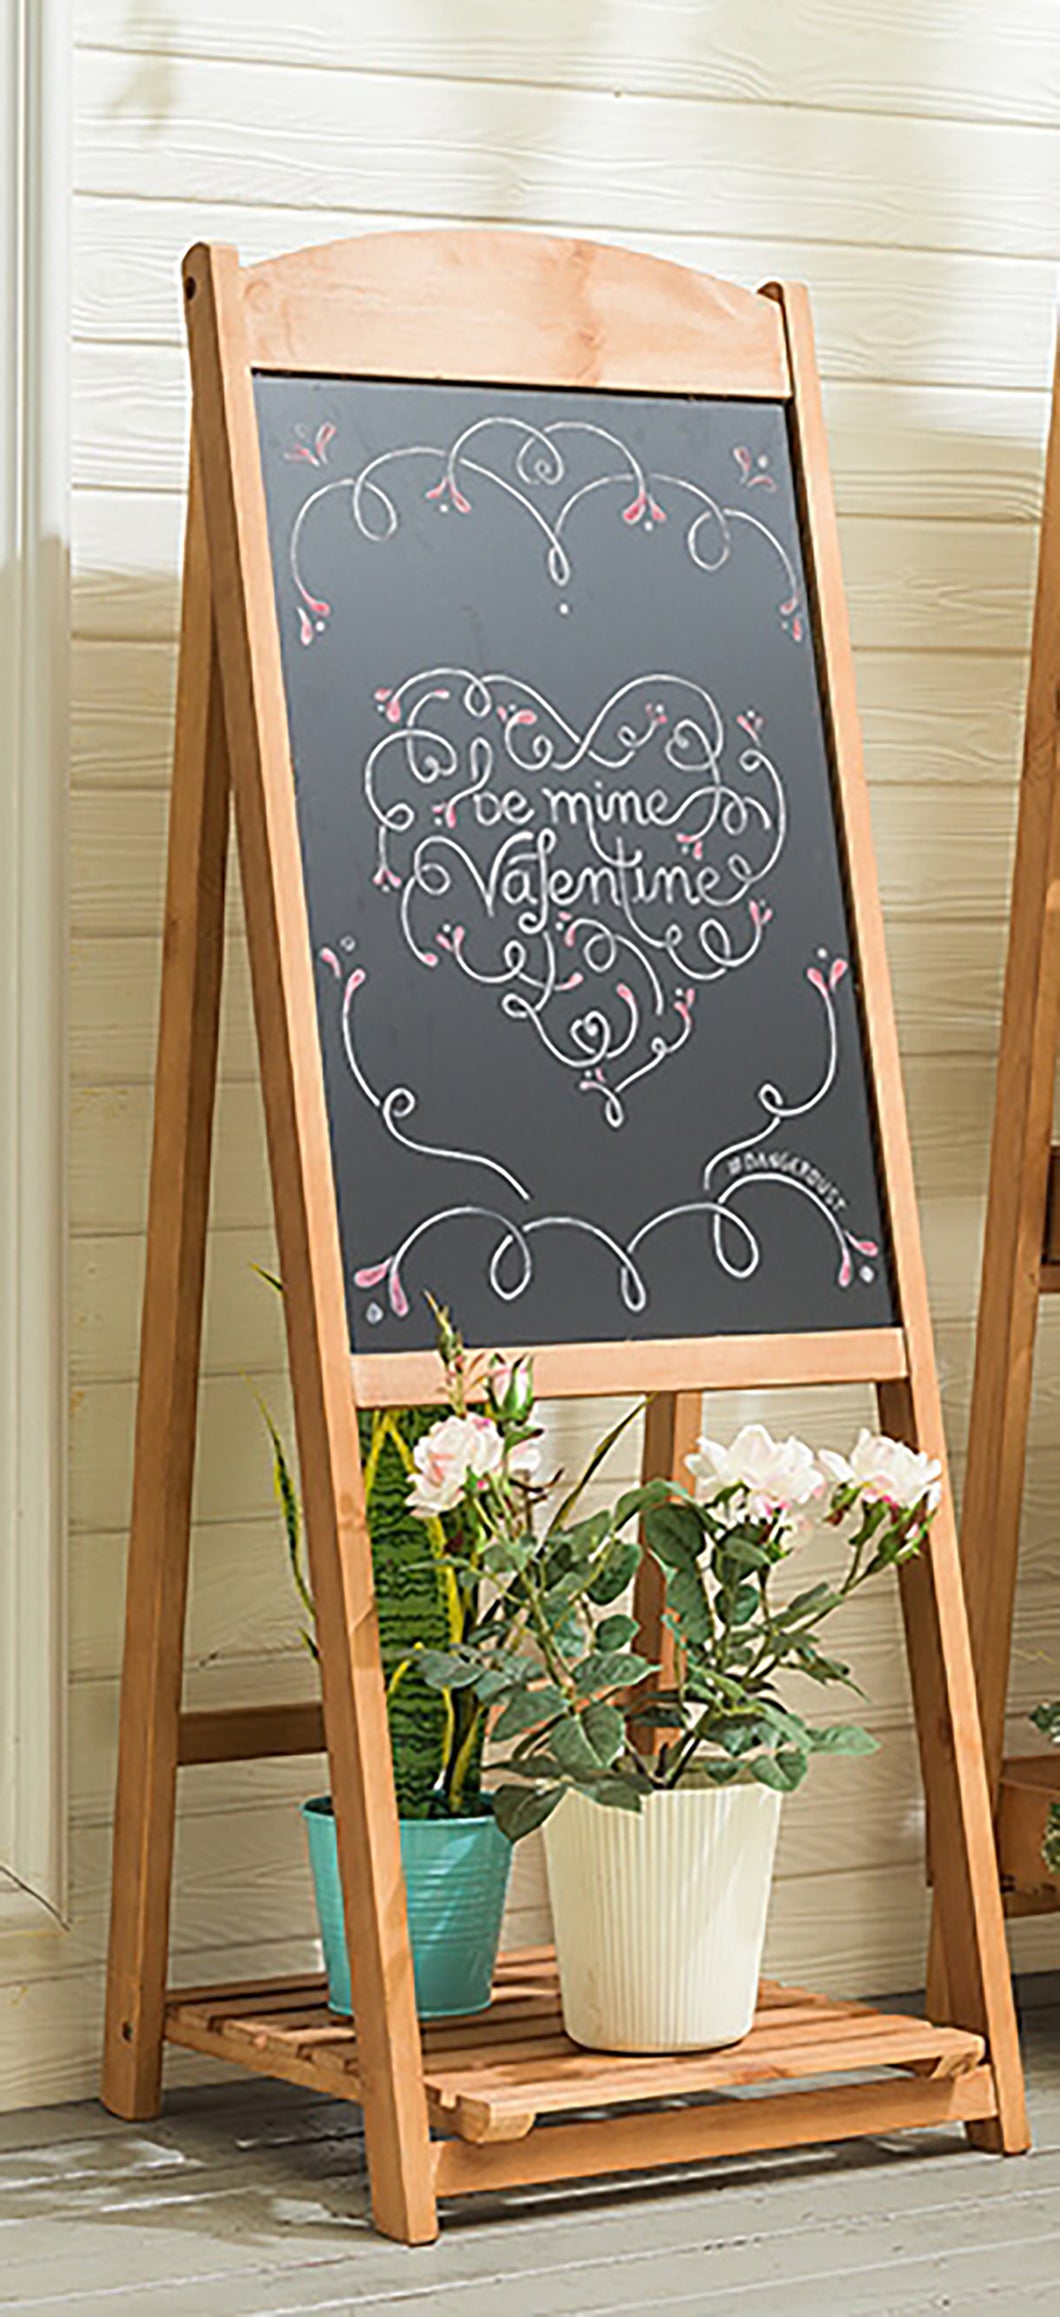 Beauty Panda Teak Wood Chalkboard Sign Free Standing Chalkboard Easel/Sturdy Sidewalk Sign Sandwich Board/Outdoor with Plant Stand and Chalk Board for Weddings & More(EAS2)